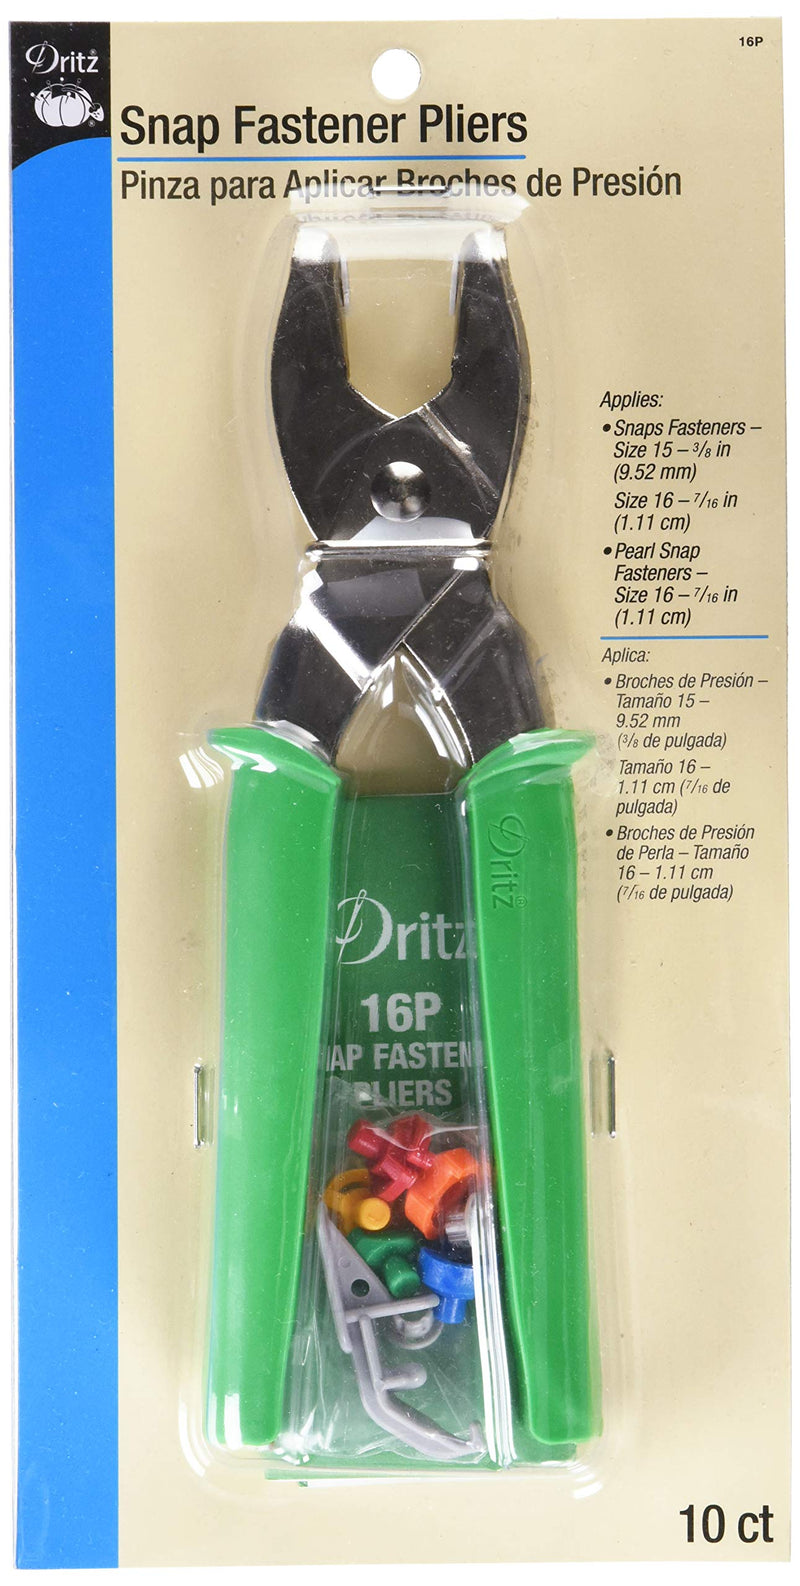  [AUSTRALIA] - Dritz 16P Snap Fastener Pliers, Size 15 (3/8-Inch) & Size 16 (7/16-Inch), Metal Size 15 (3/8-Inch) & Size 16 (7/16-Inch)